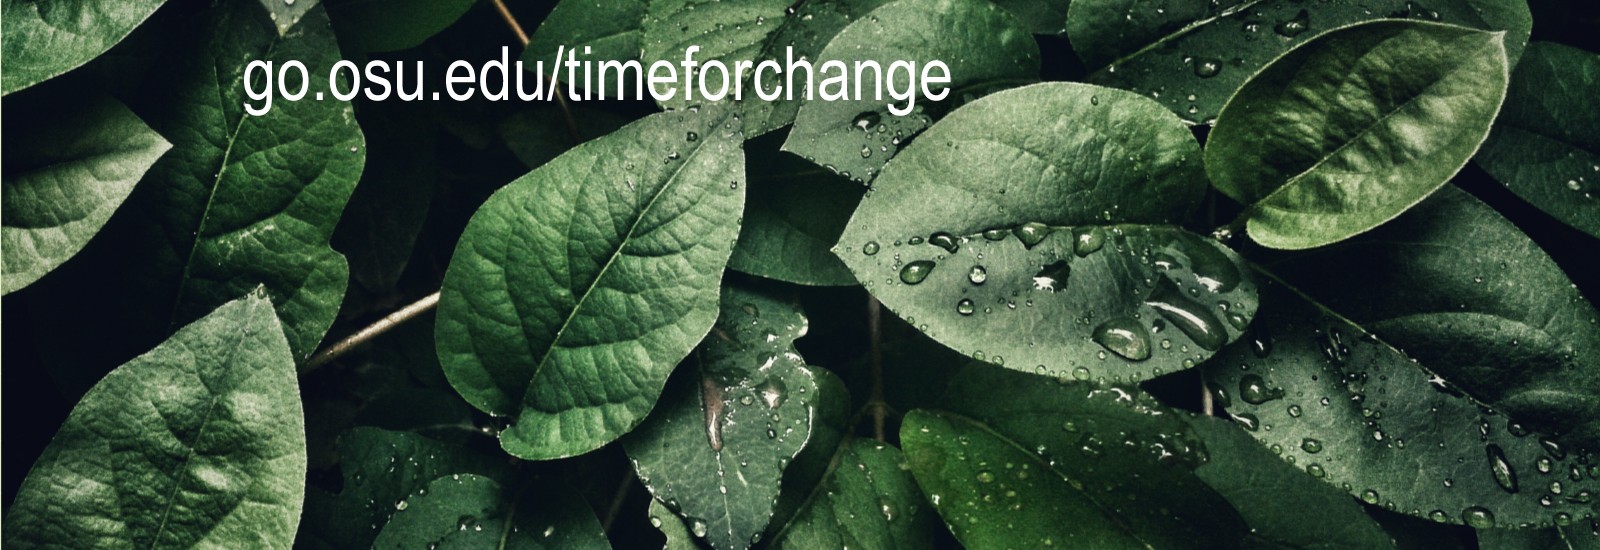 go.osu.edu/timeforchange, leaves with rain droplets